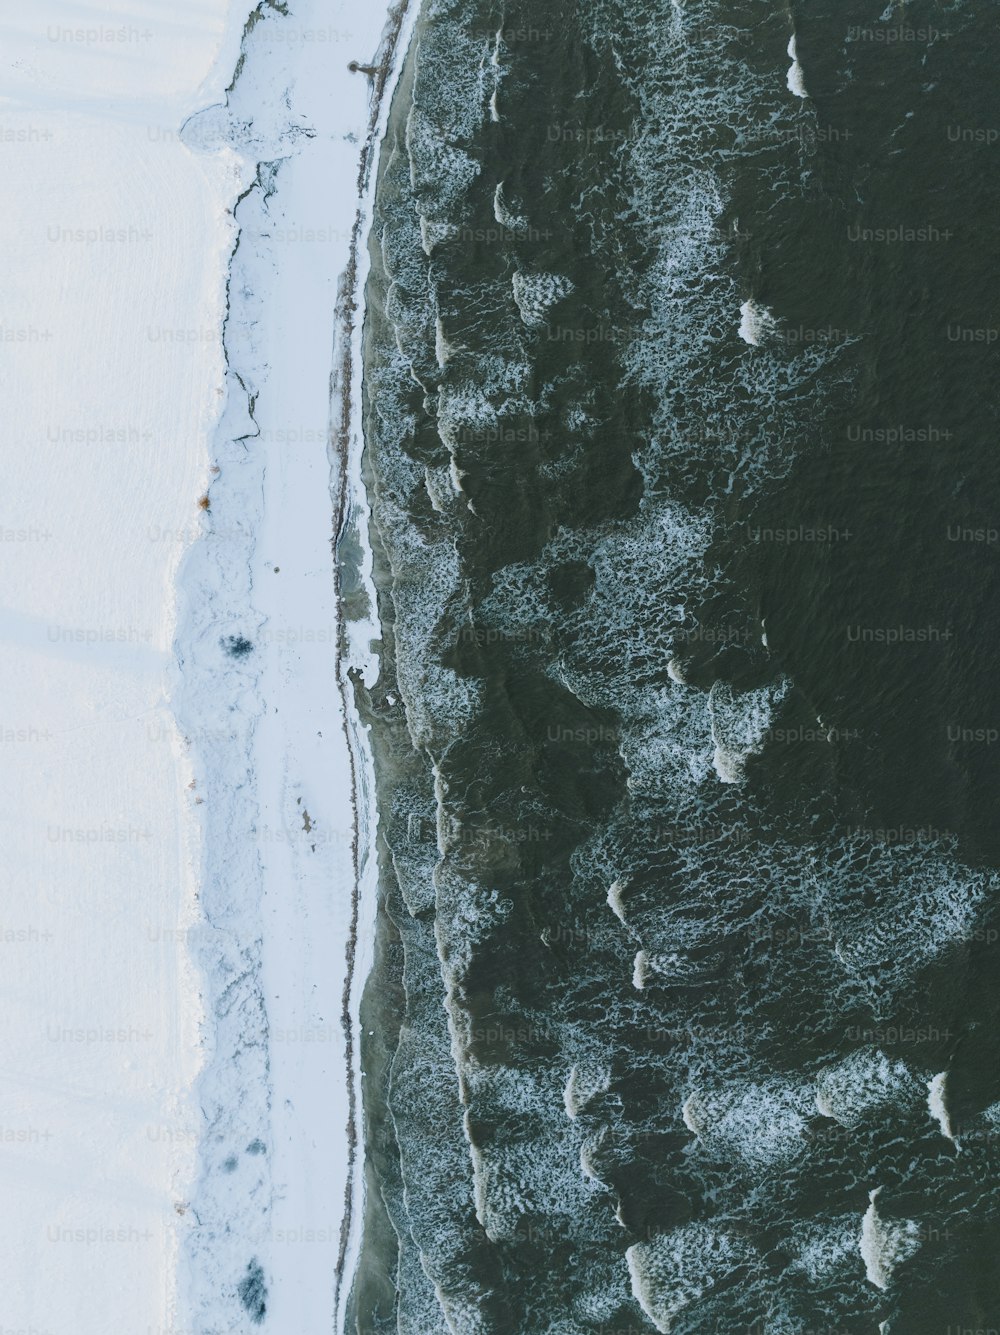 Una vista a volo d'uccello di una spiaggia coperta di neve